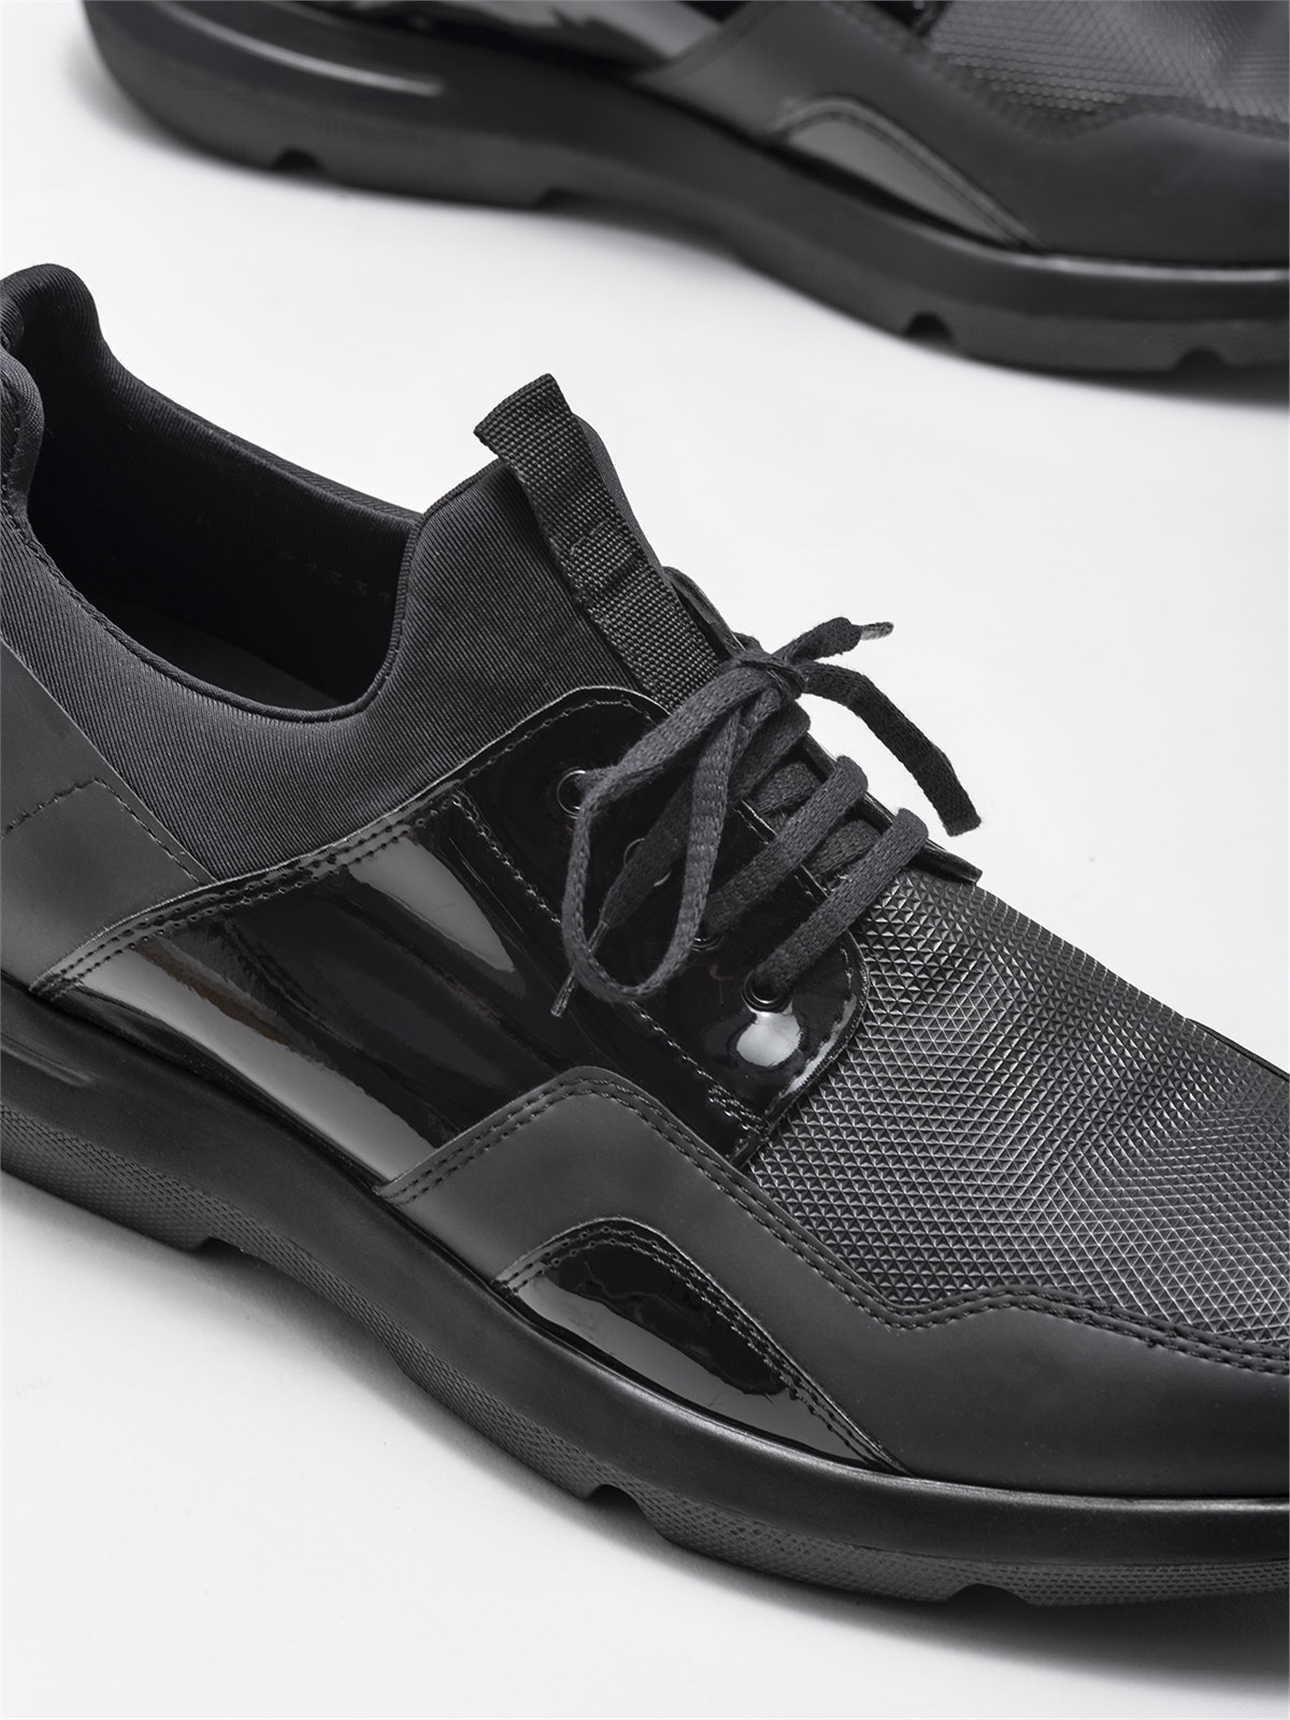 siyah erkek spor ayakkabi satin al delano 1 rcb fiyati elle shoes